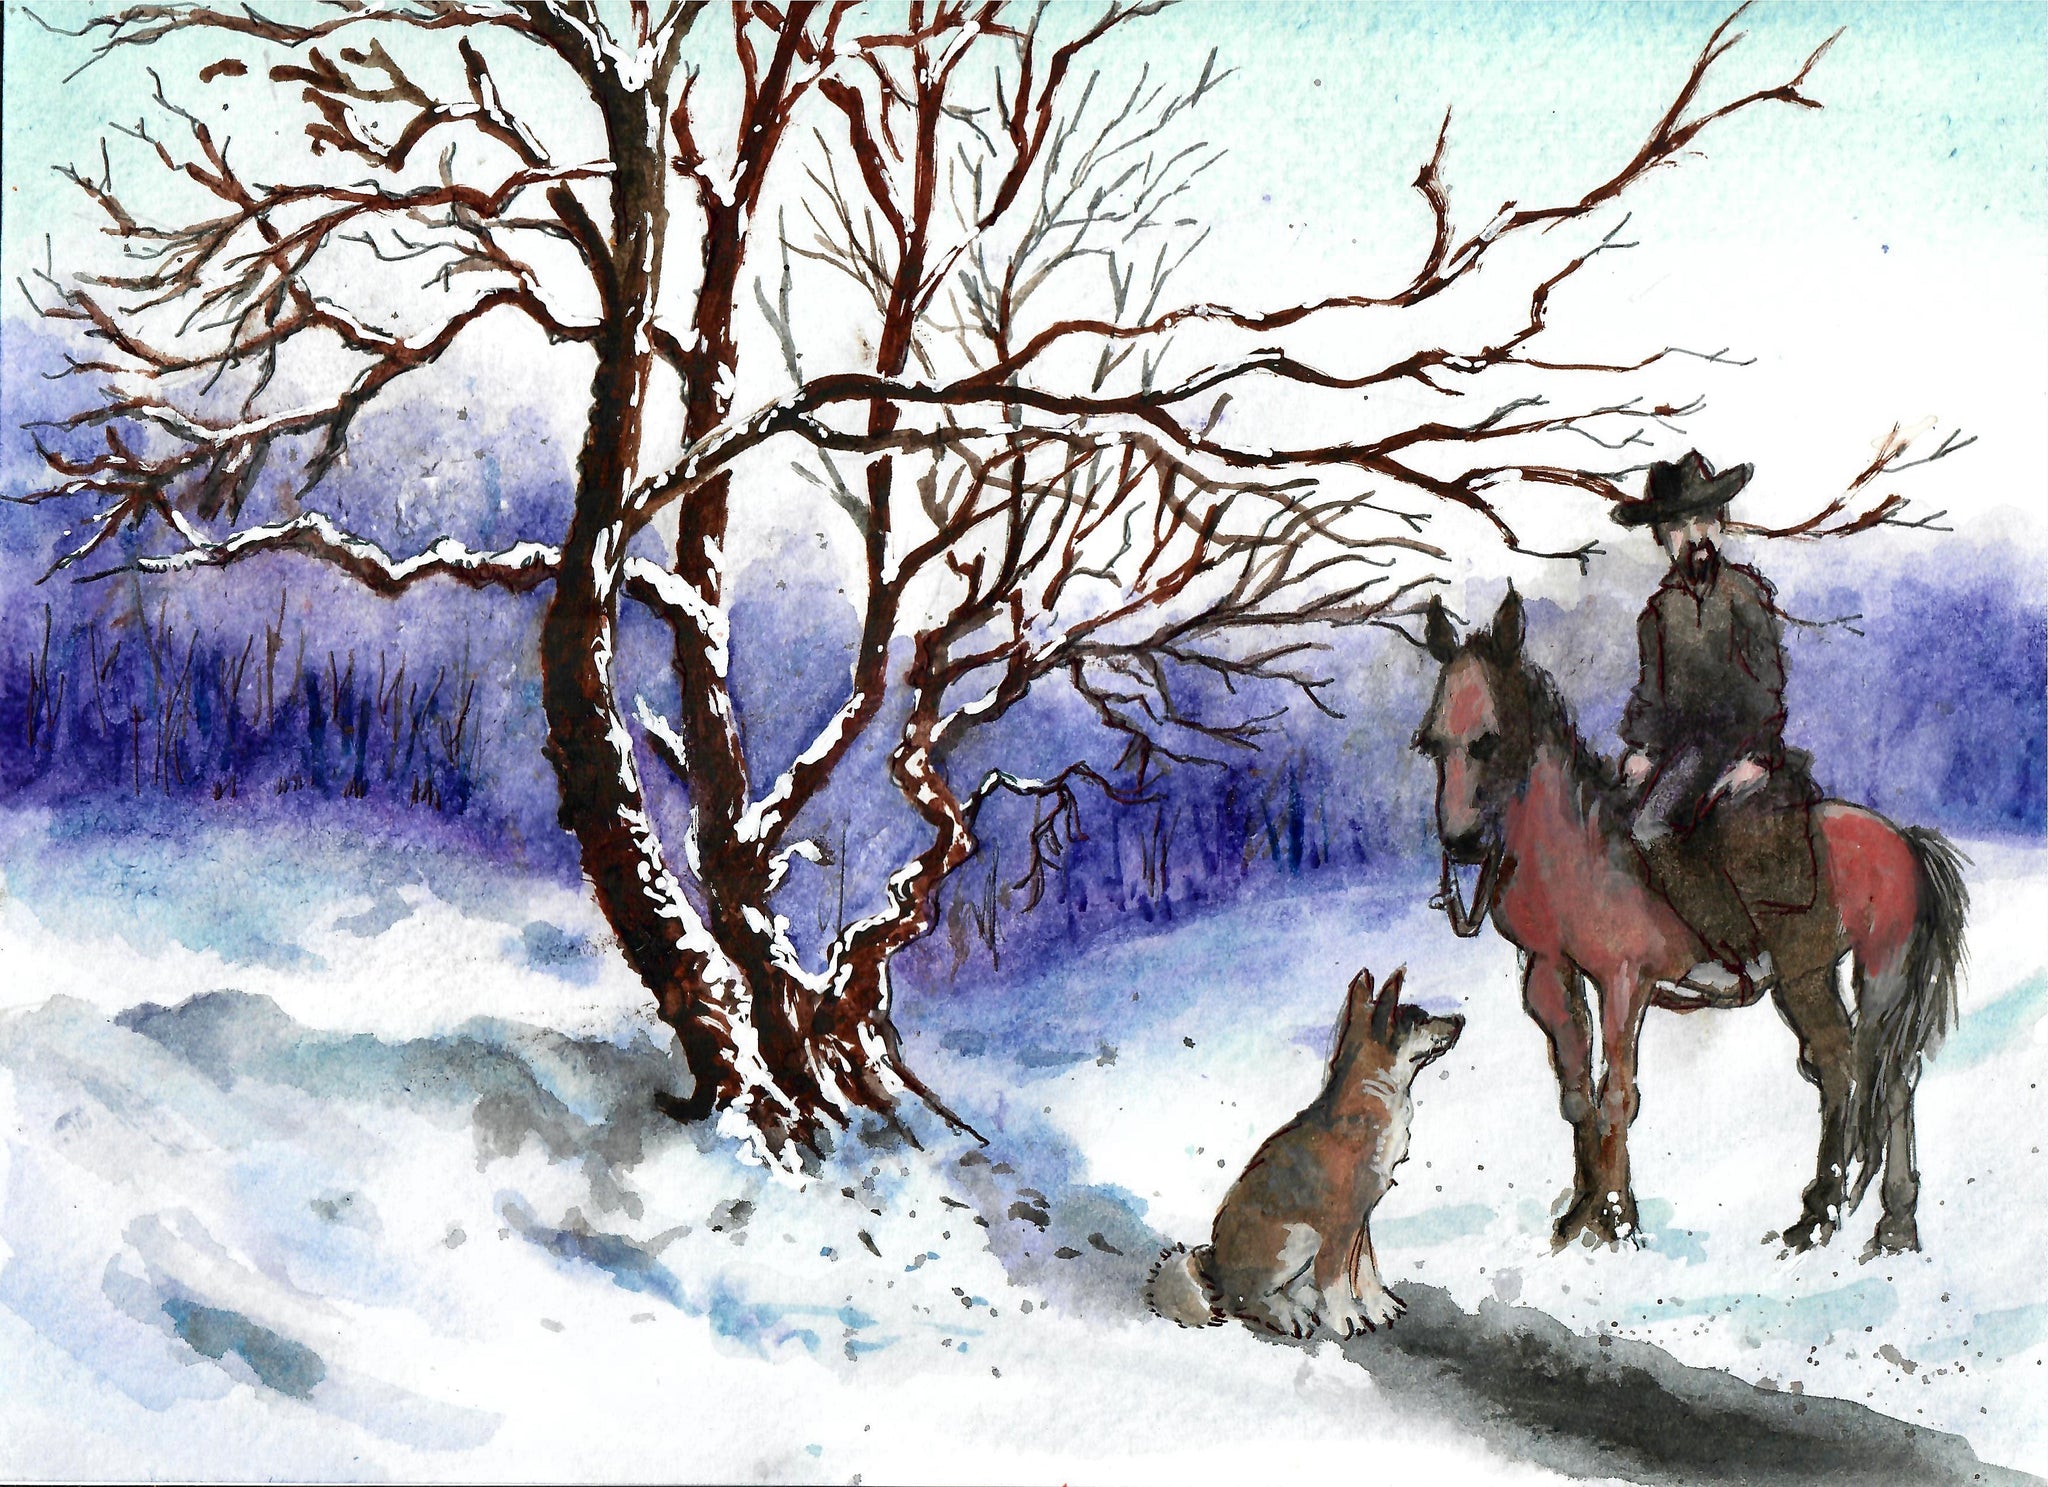 Western - Cowboy Near Trees In Winter, Cowboy Art, Winter Western Scene, Cowboy Wall Decor